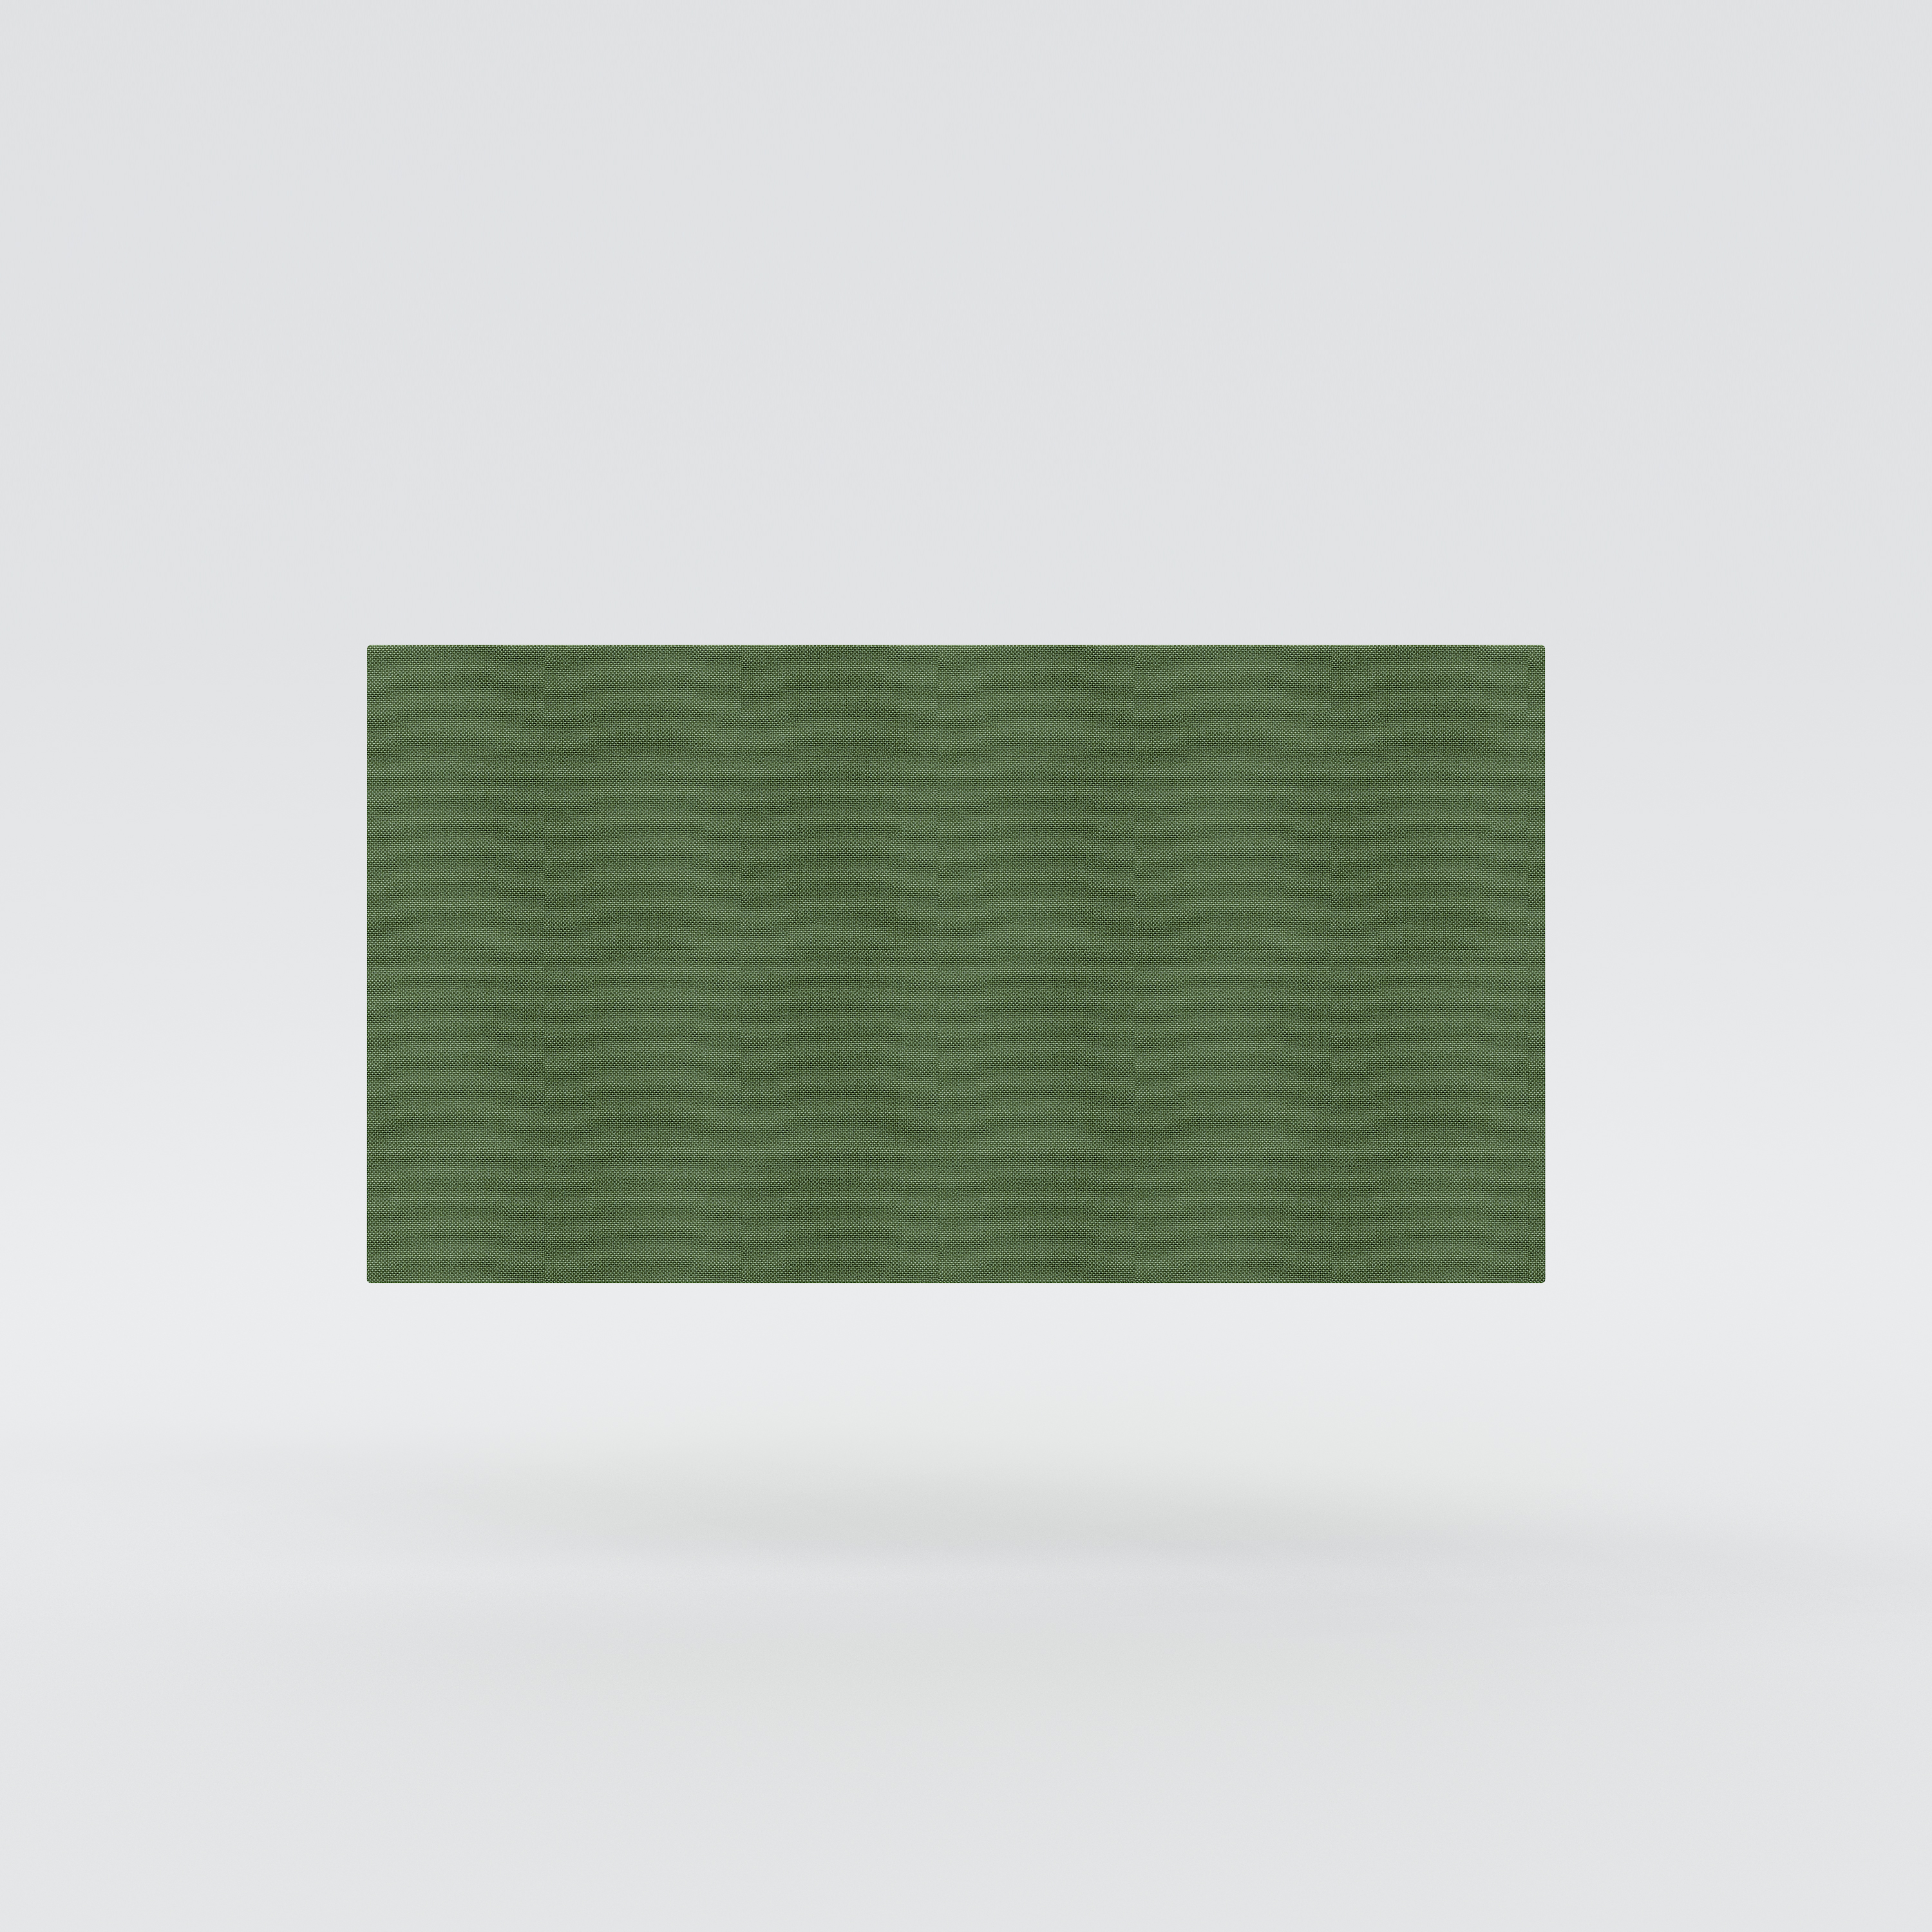 Table screen fabric, Carlow green, 1200x650 1200x650, white fittings